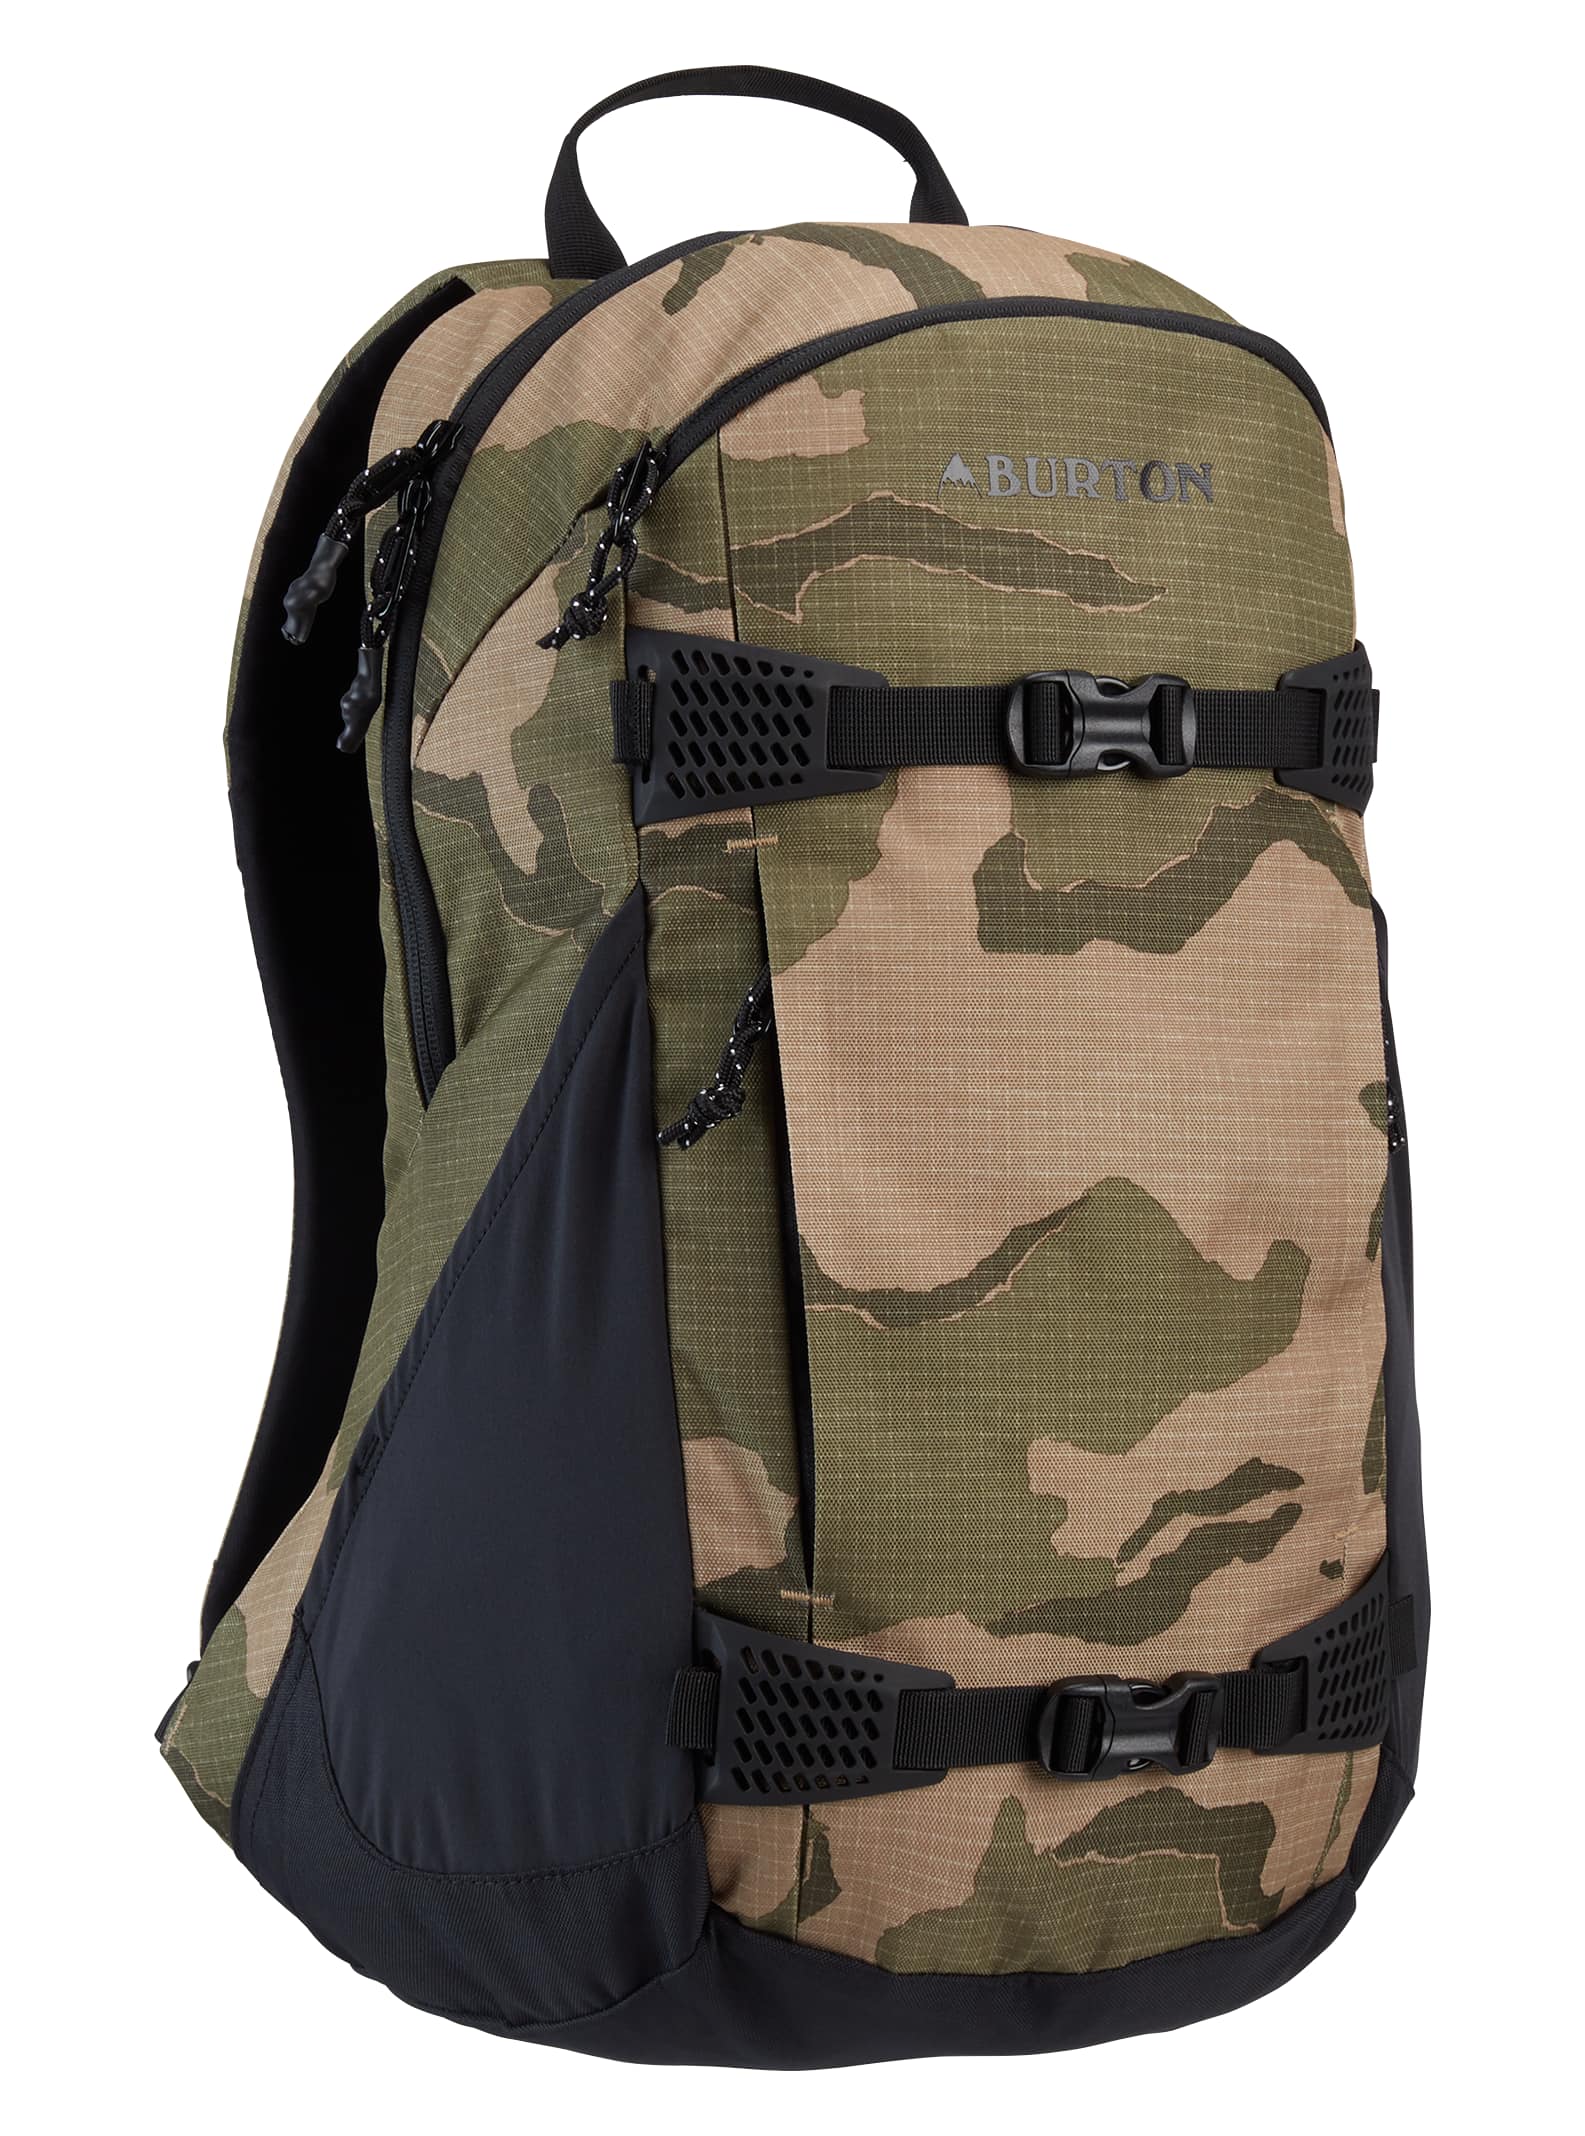 Burton Day Hiker 25L Backpack | Burton.com Spring 2021 US